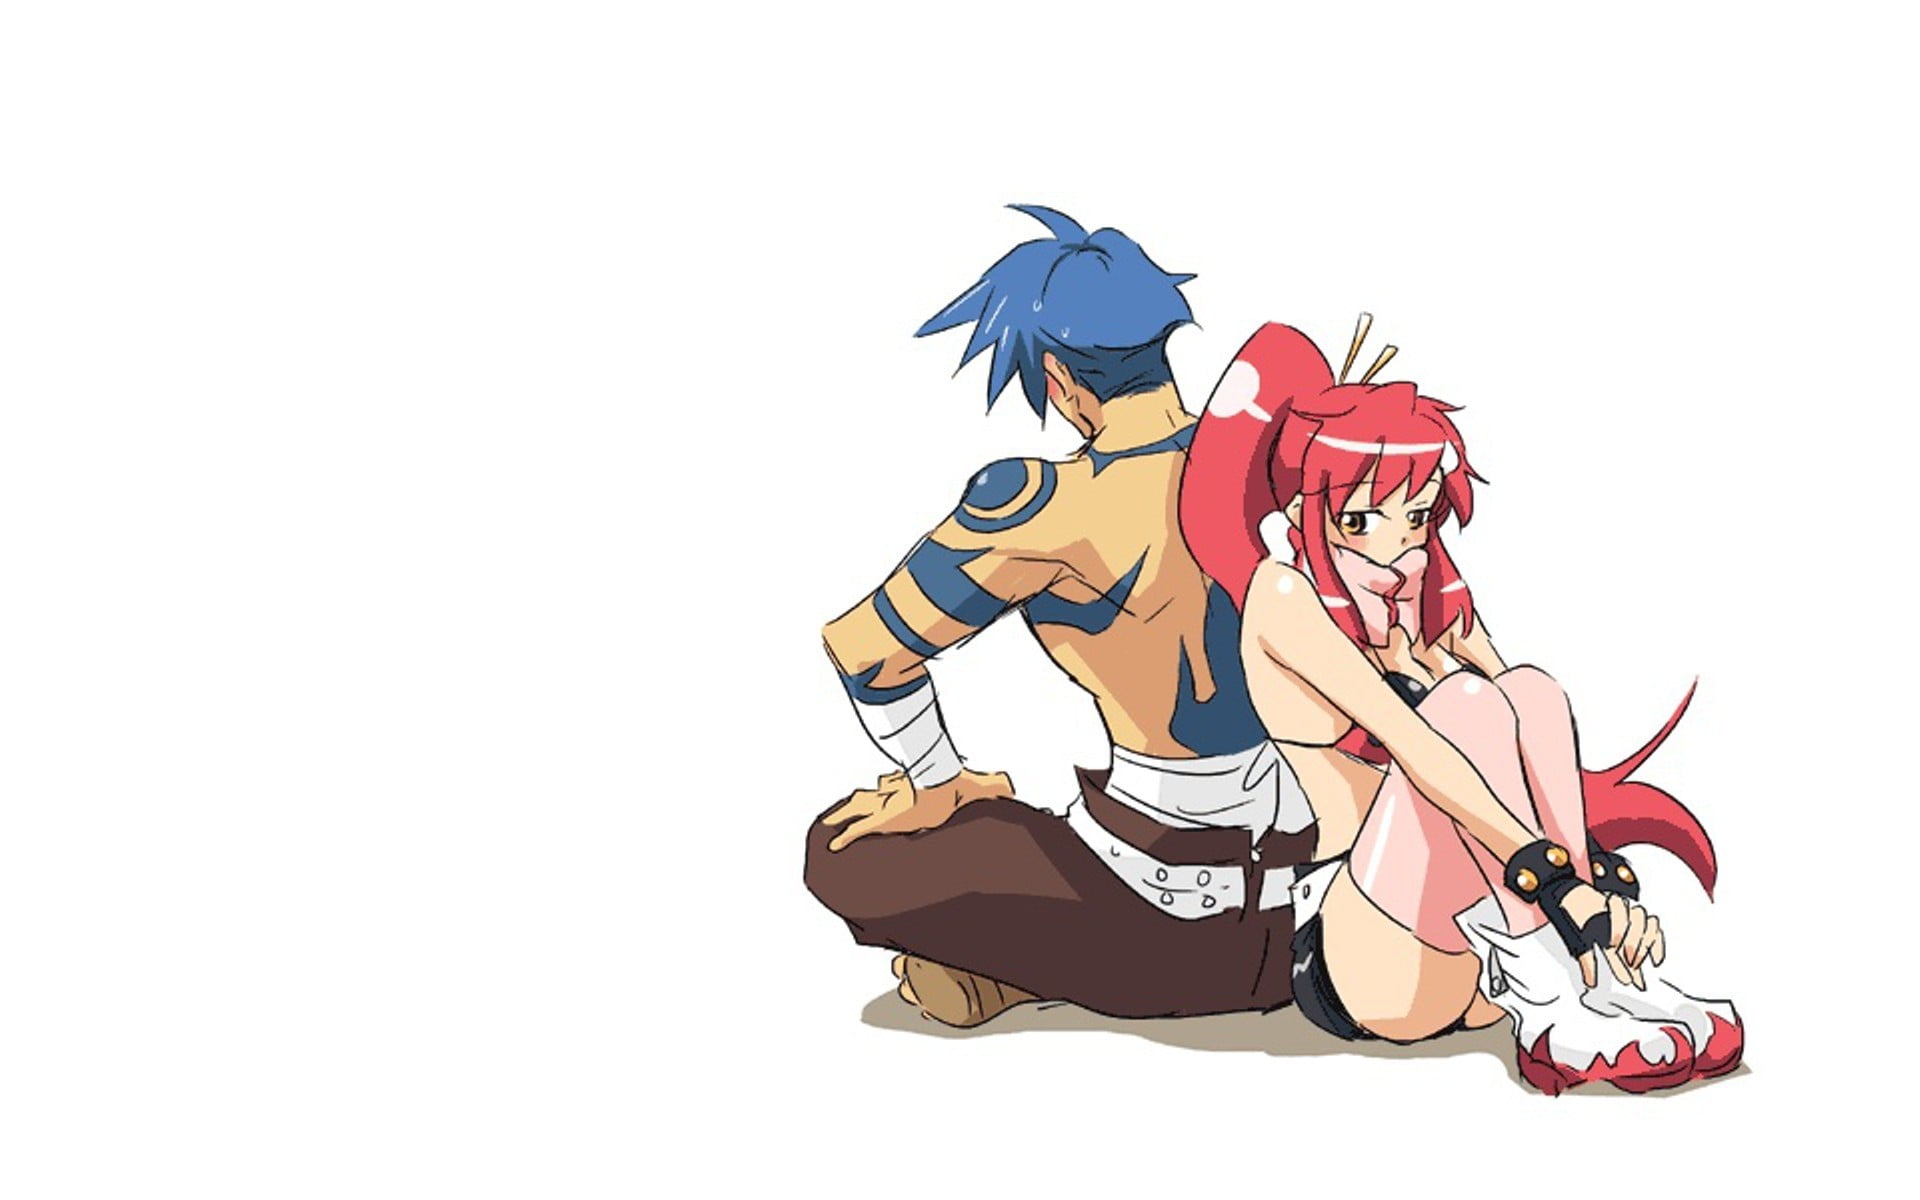 red haired female anime illustration